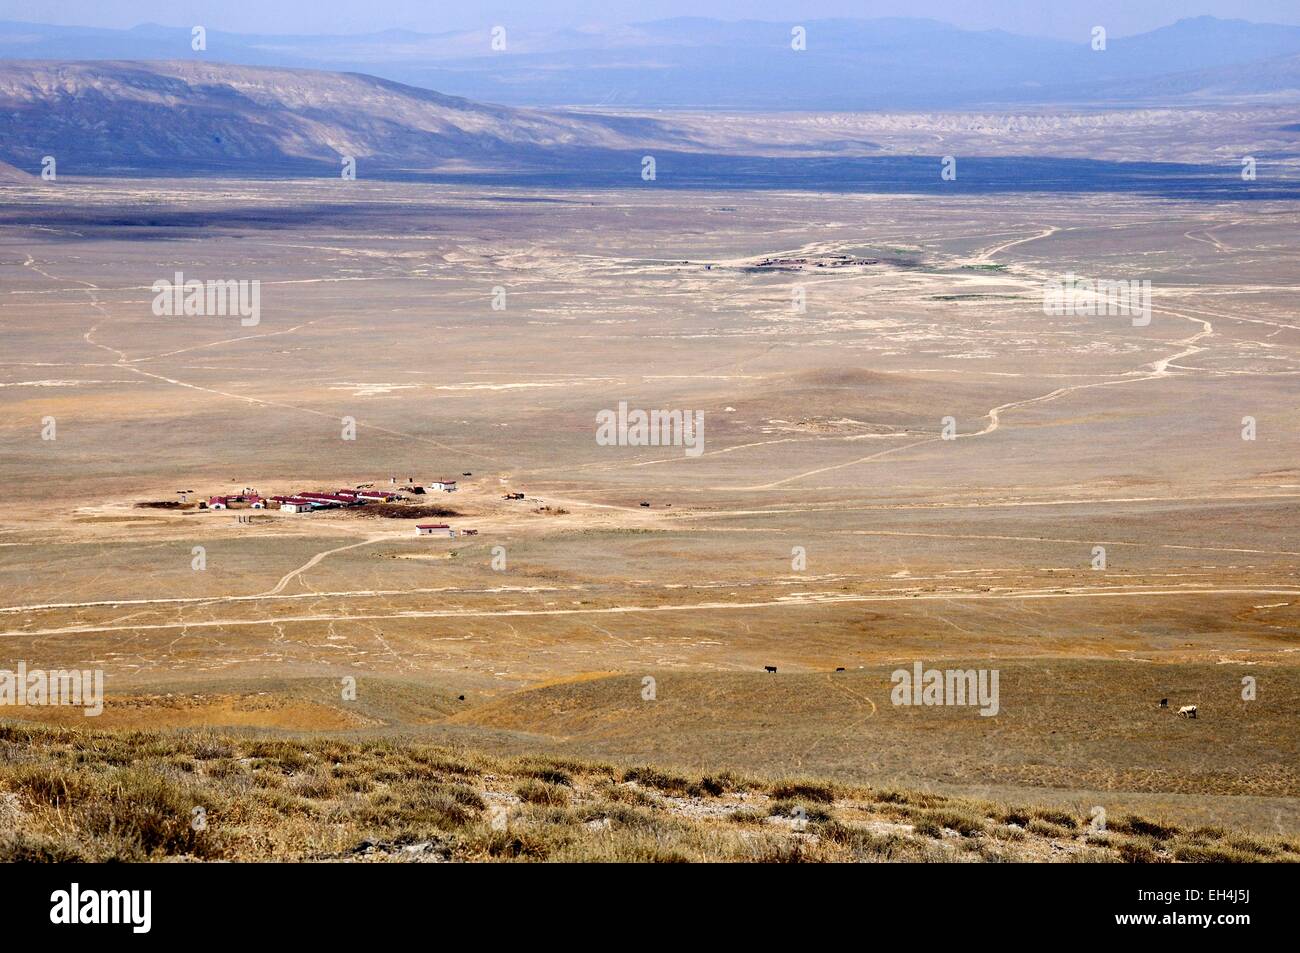 Azerbaijan, Qobustan, farm on arid plains Stock Photo